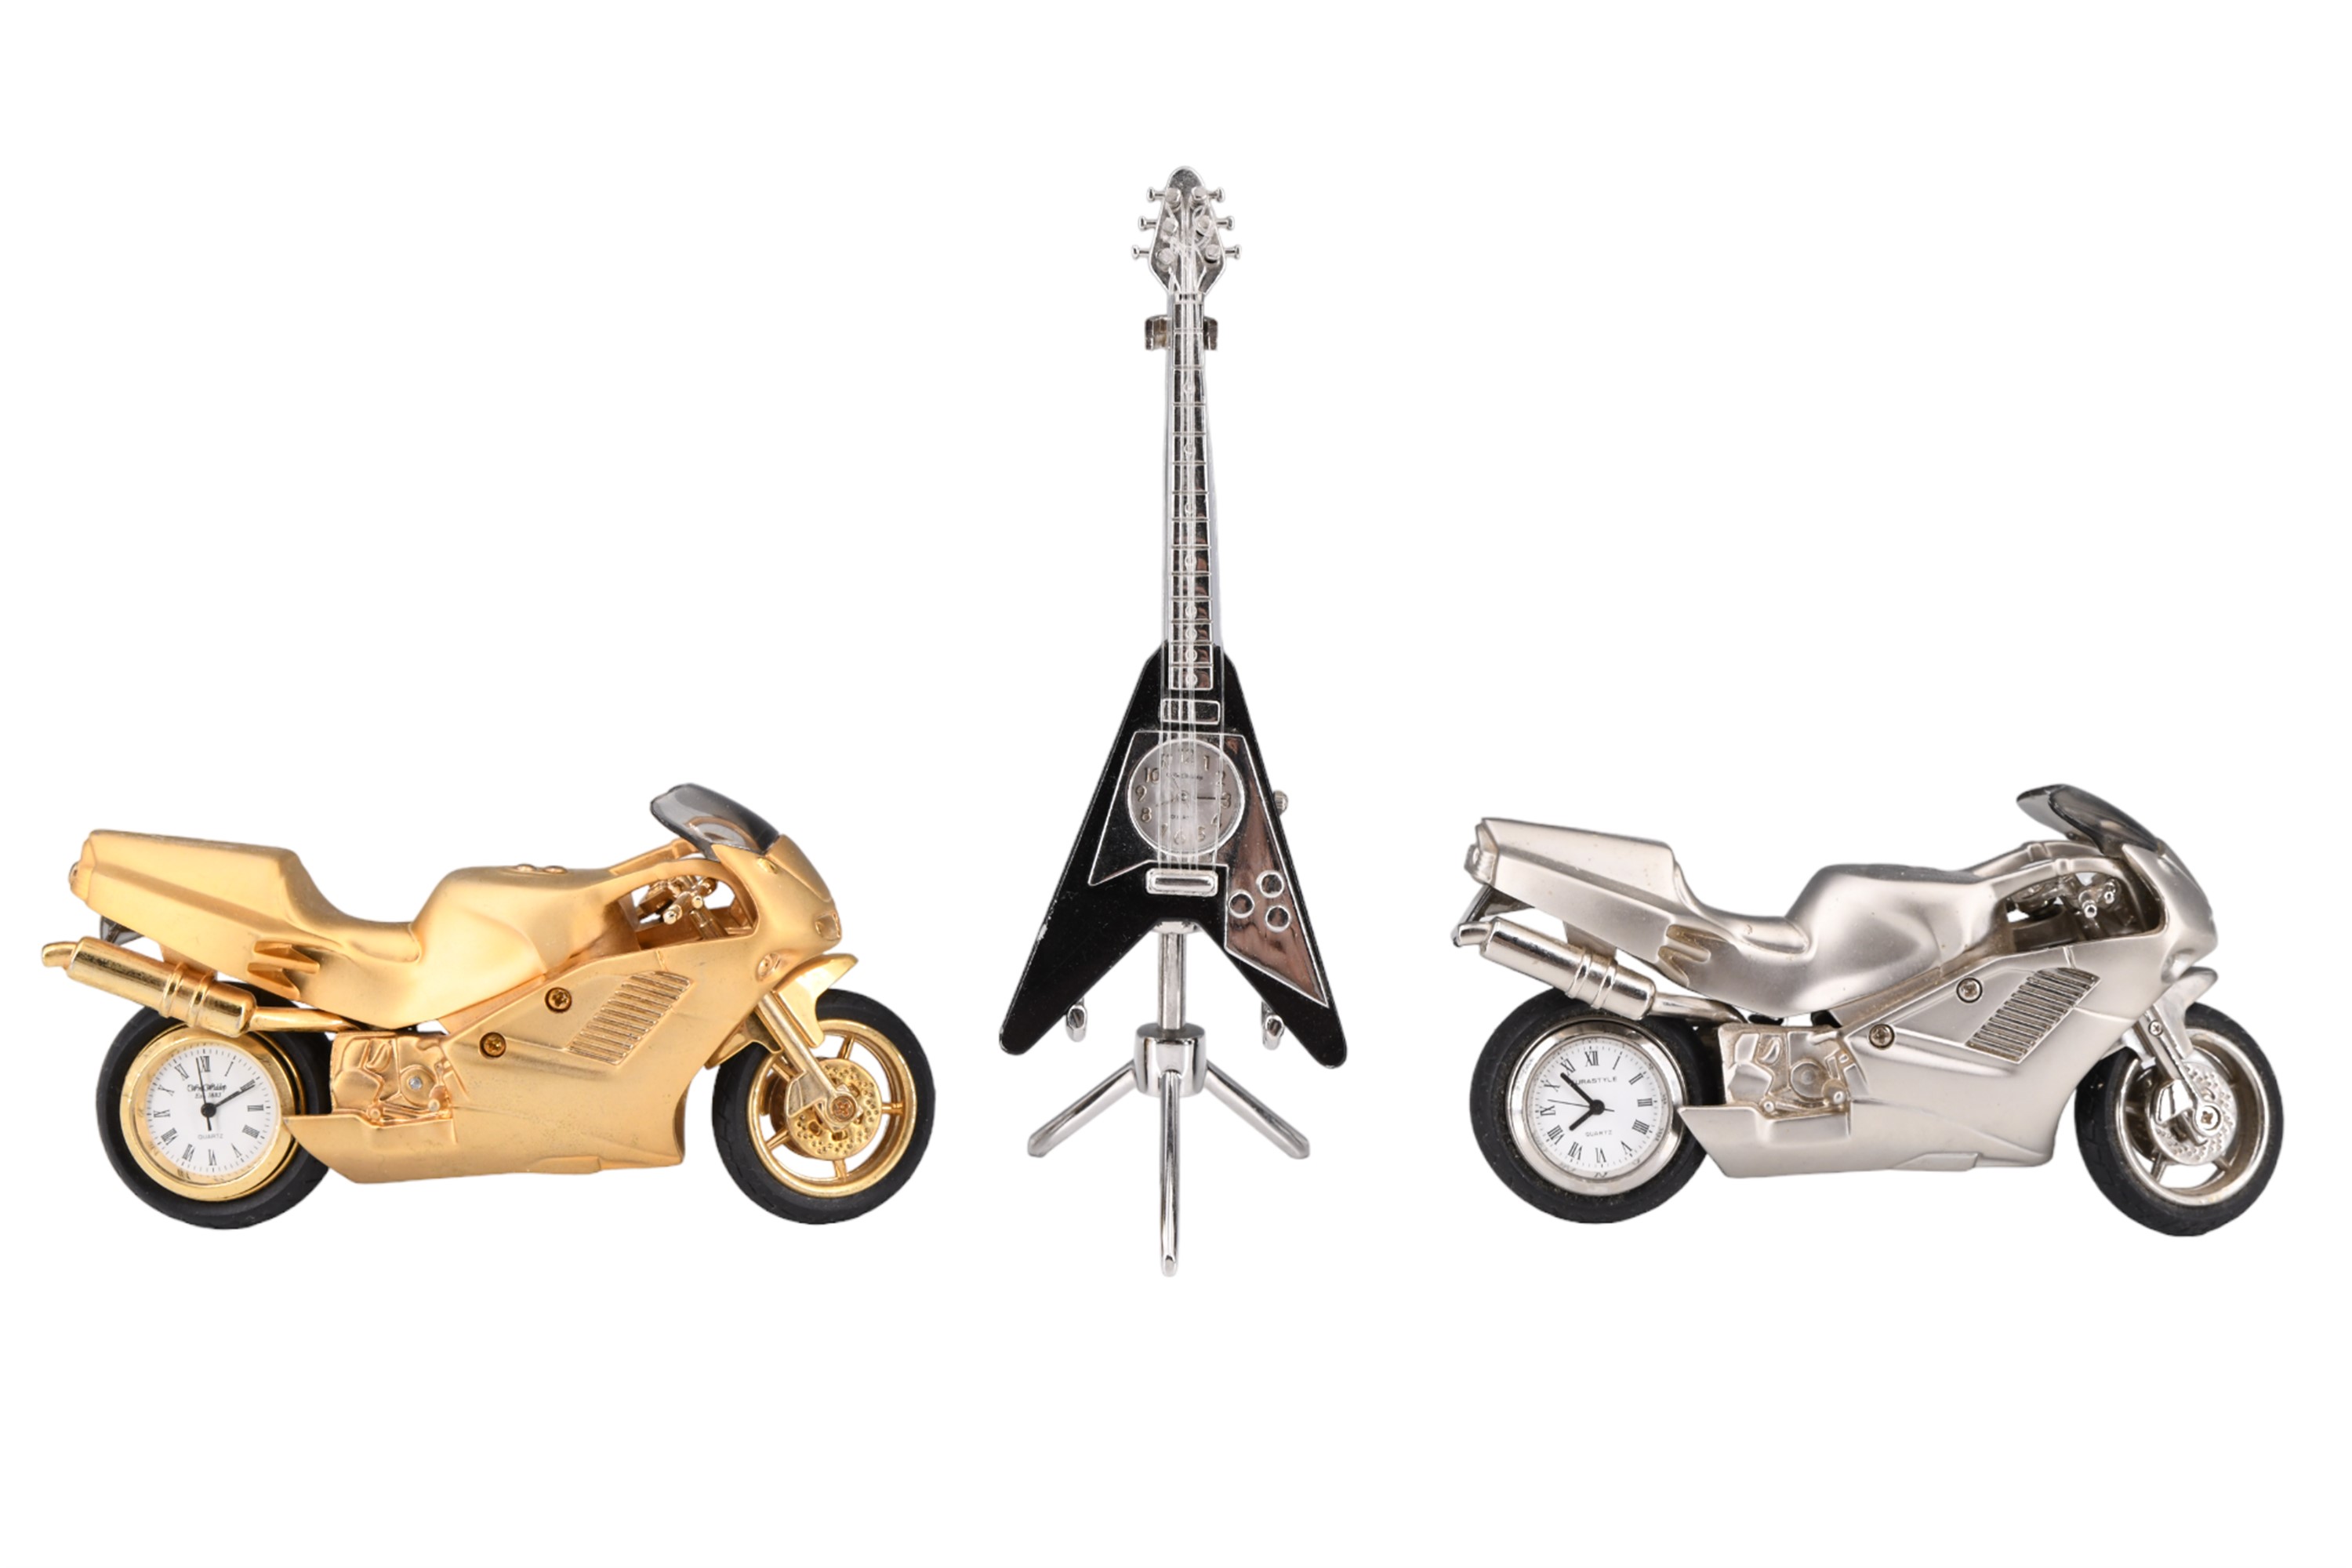 Six miniature novelty clocks, including three motorcycles, guitar, etc - Image 3 of 3